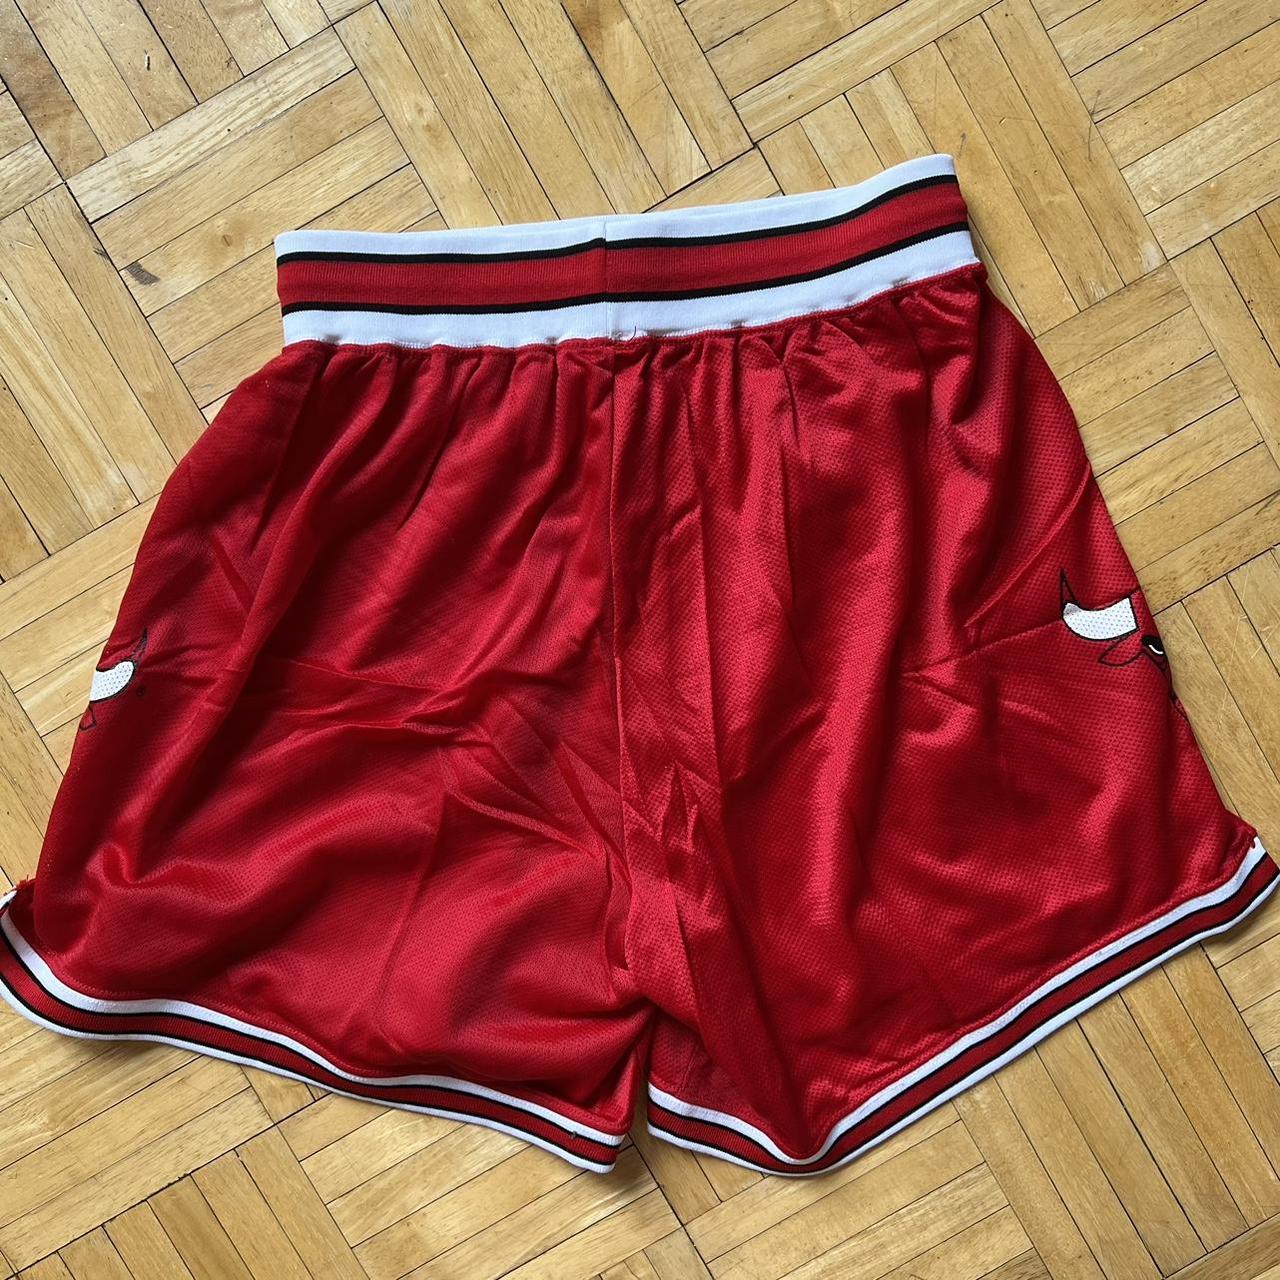 1990s white vintage Chicago Bulls Champion basketball shorts